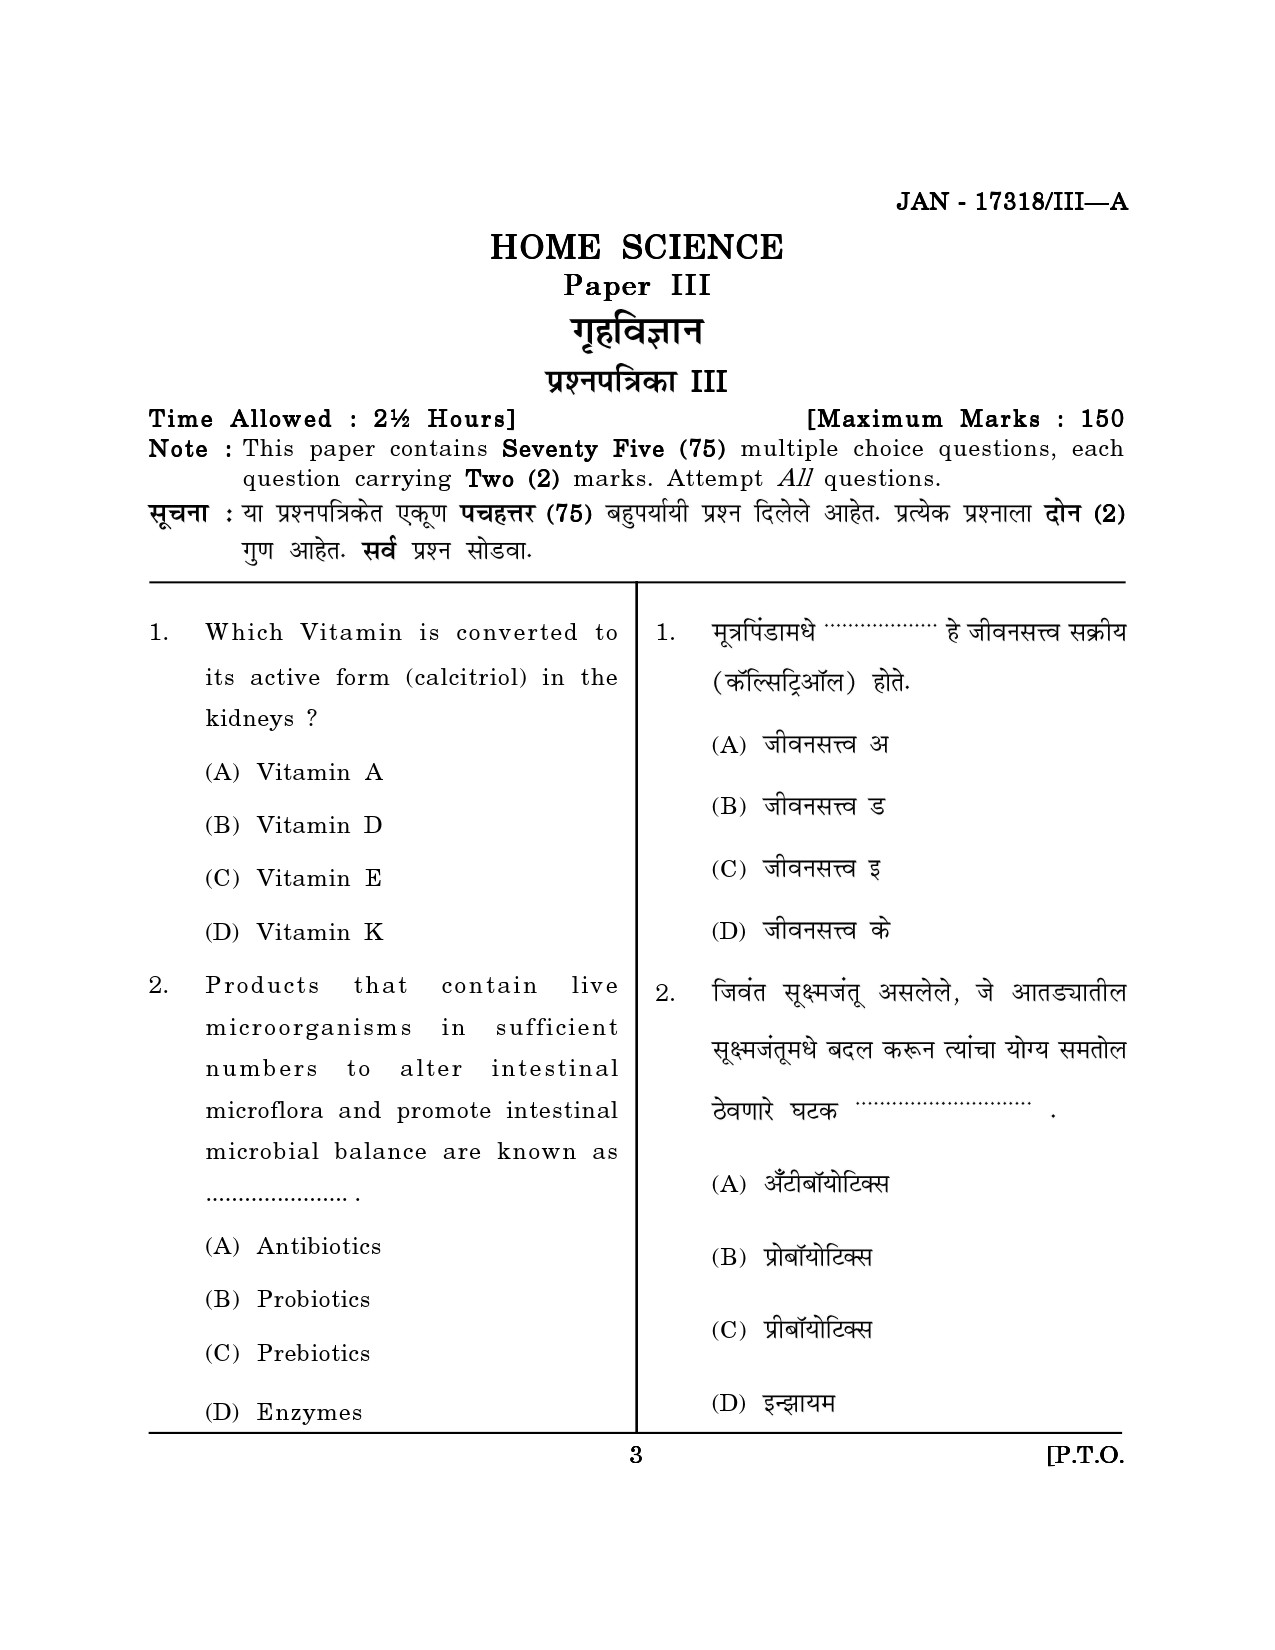 Maharashtra SET Home Science Question Paper III January 2018 2